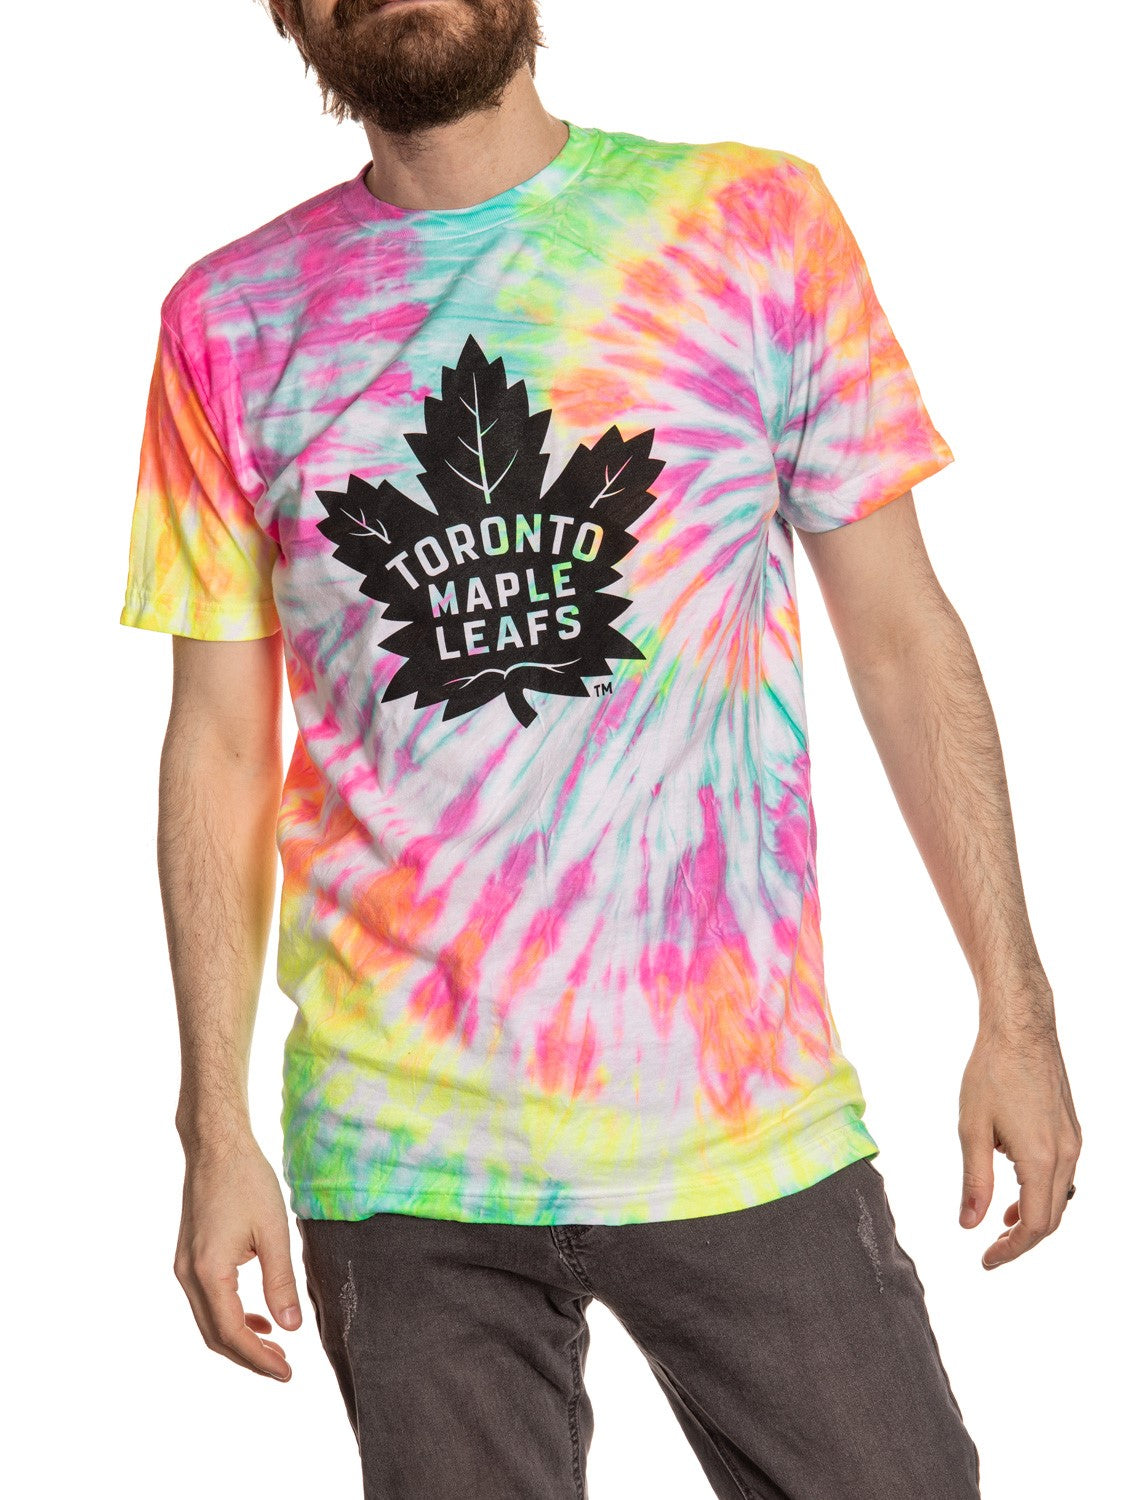 Toronto Maple Leafs Neon Rainbow Tie Dye T-Shirt Front View